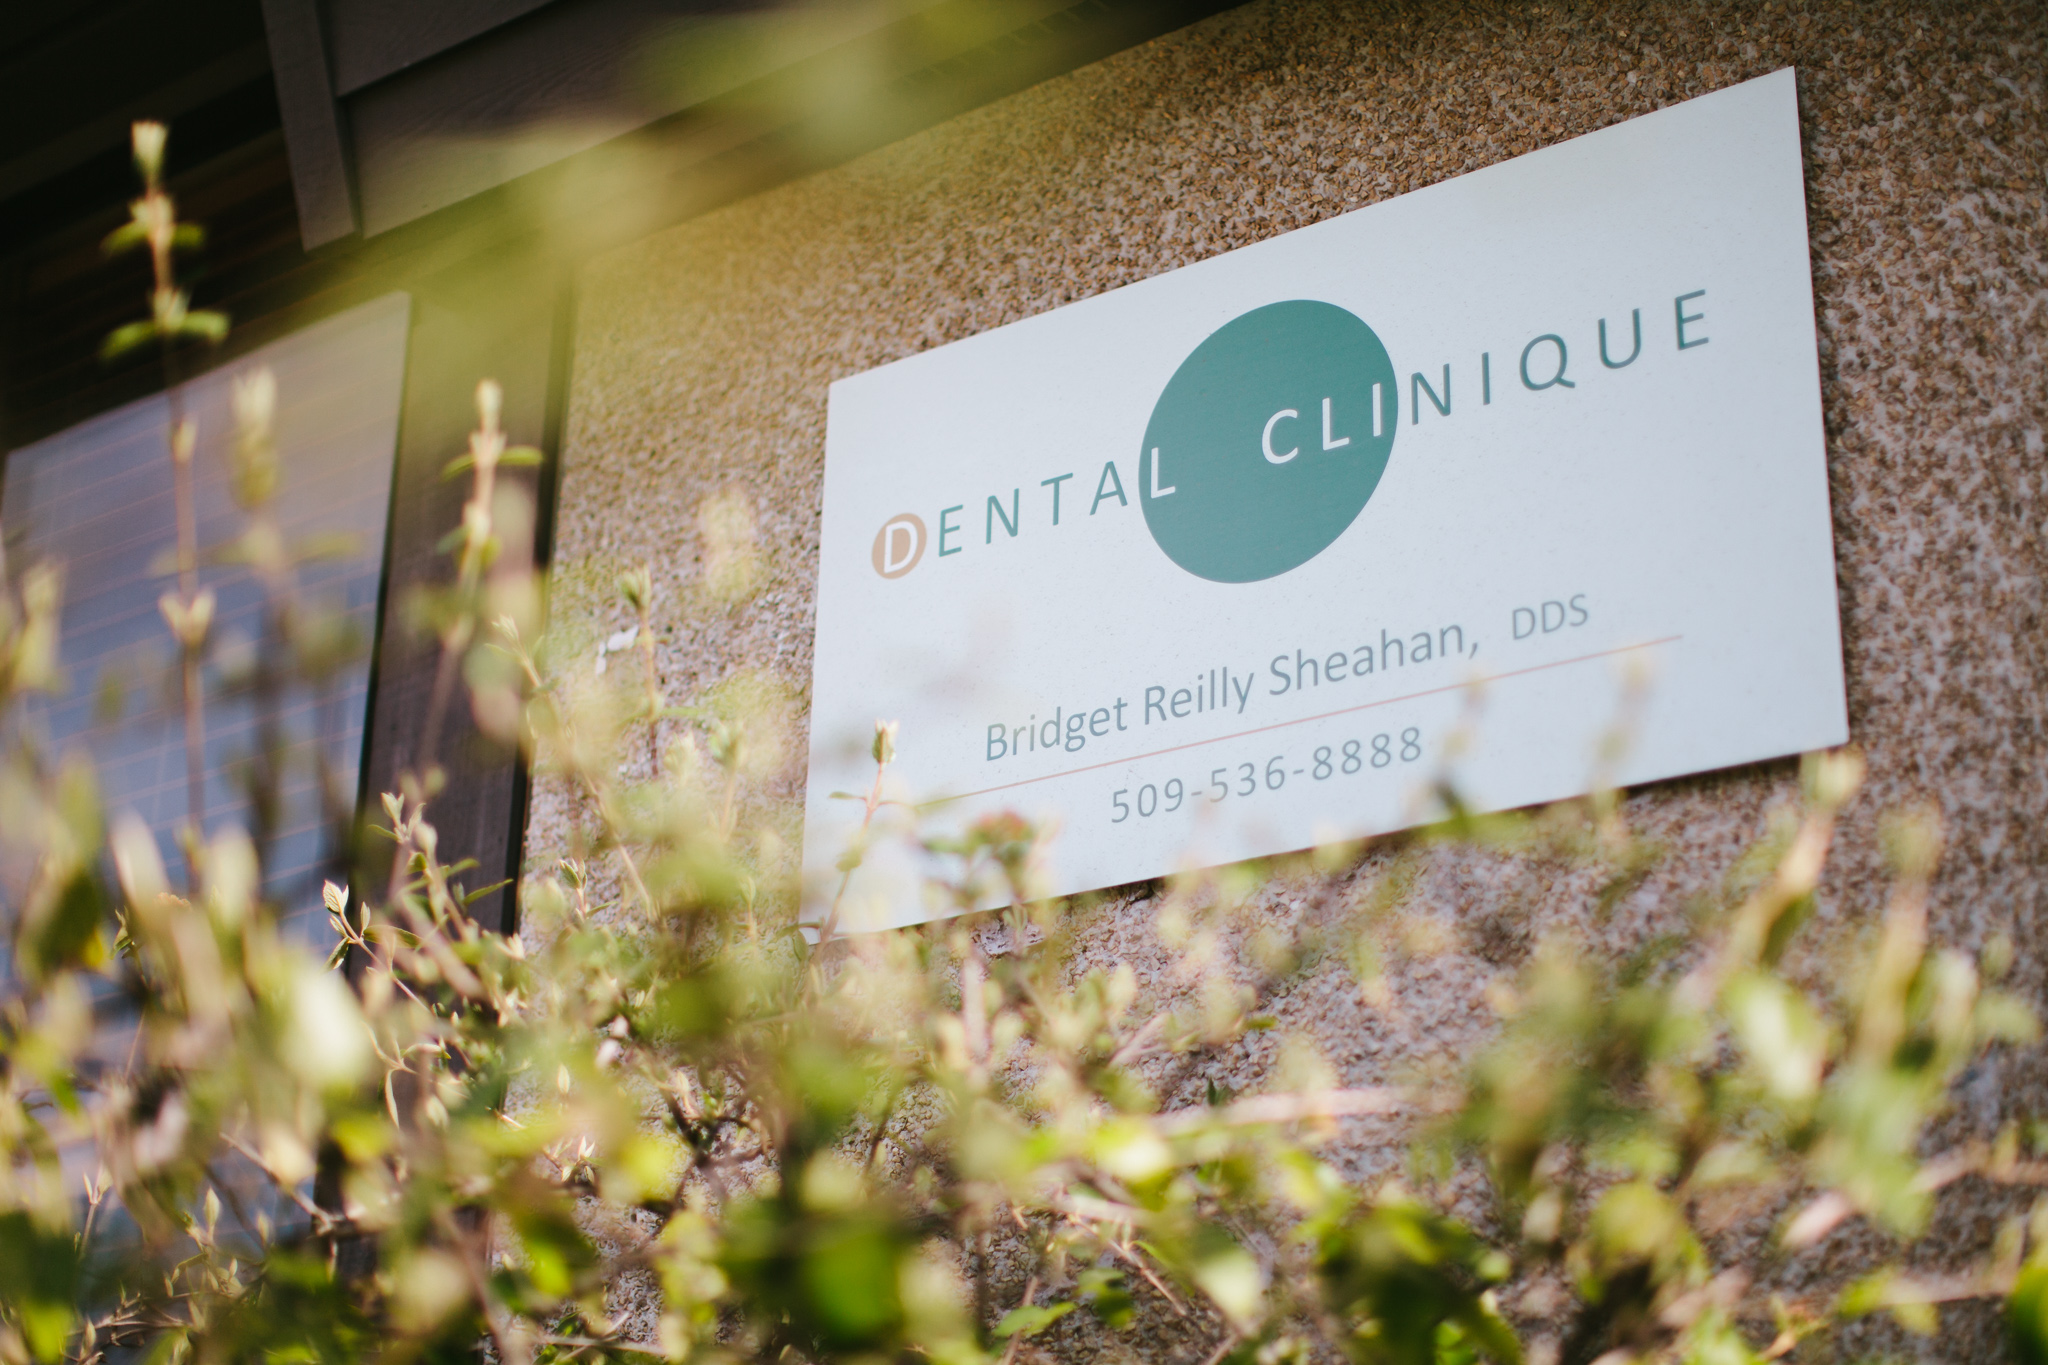 Dental Clinique Spokane Dental Office Doctor Bridget Reilly Sheahan Sign